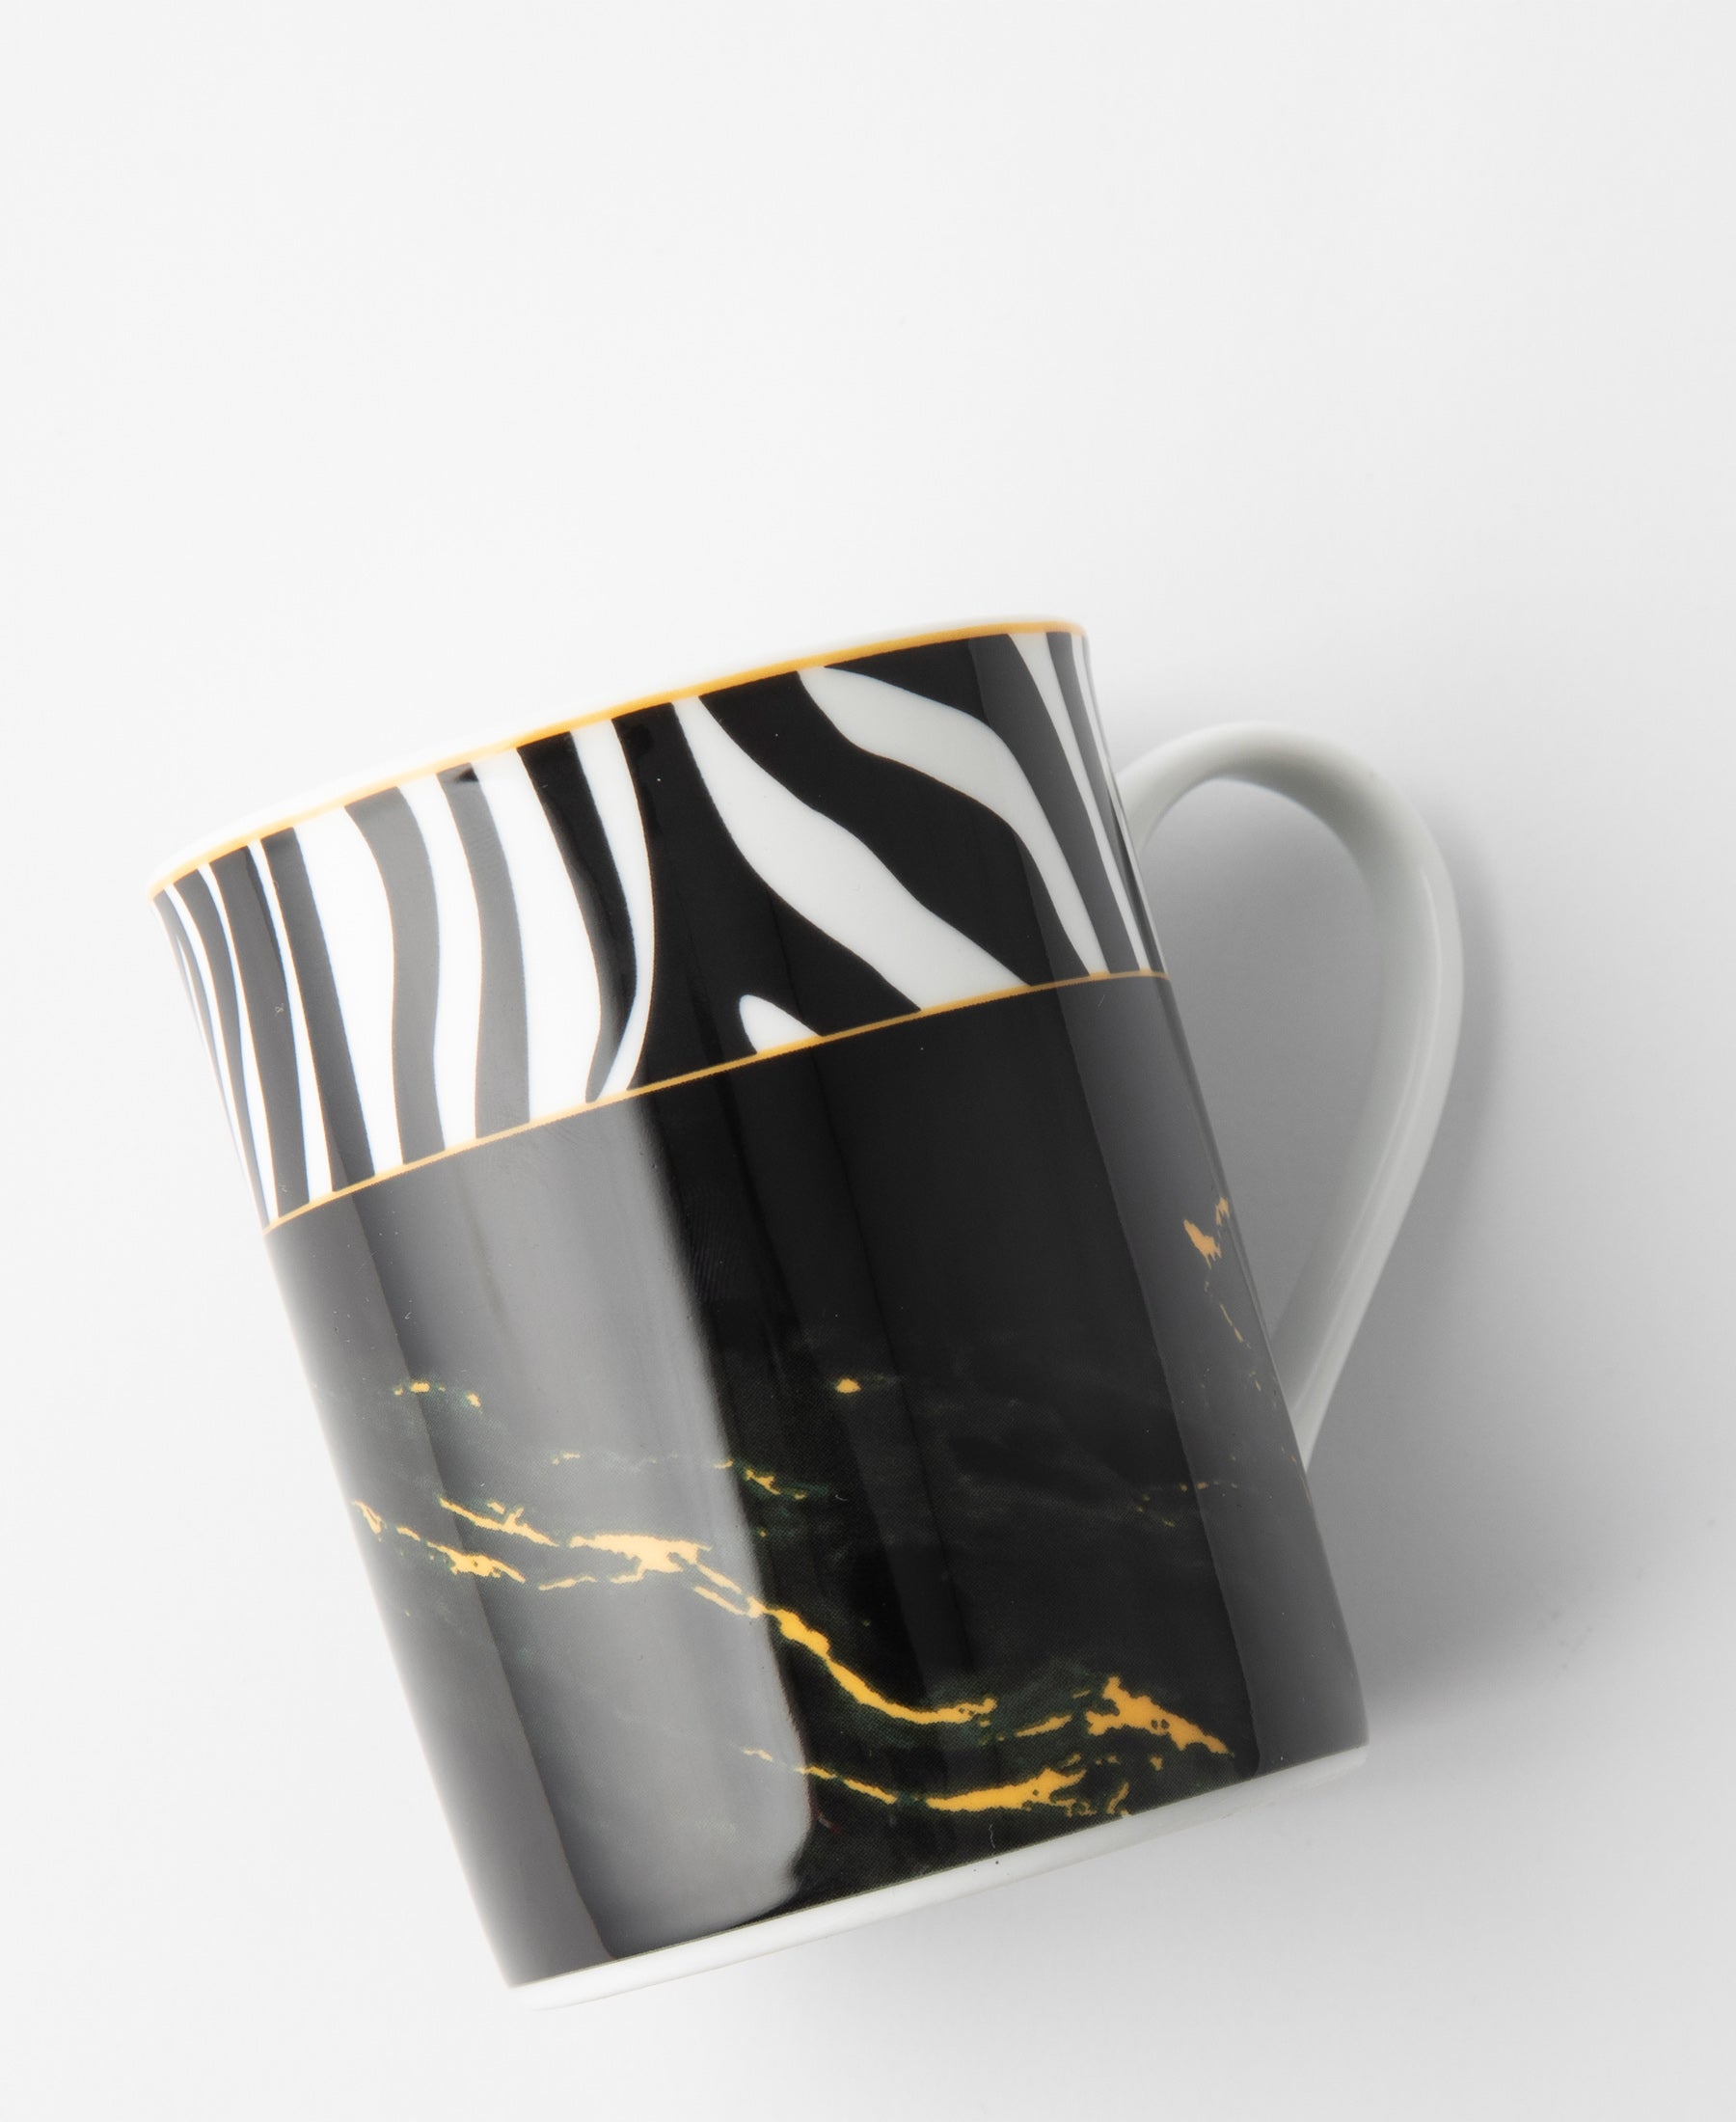 Jenna Clifford Serengeti Mug in a Box - Black & White